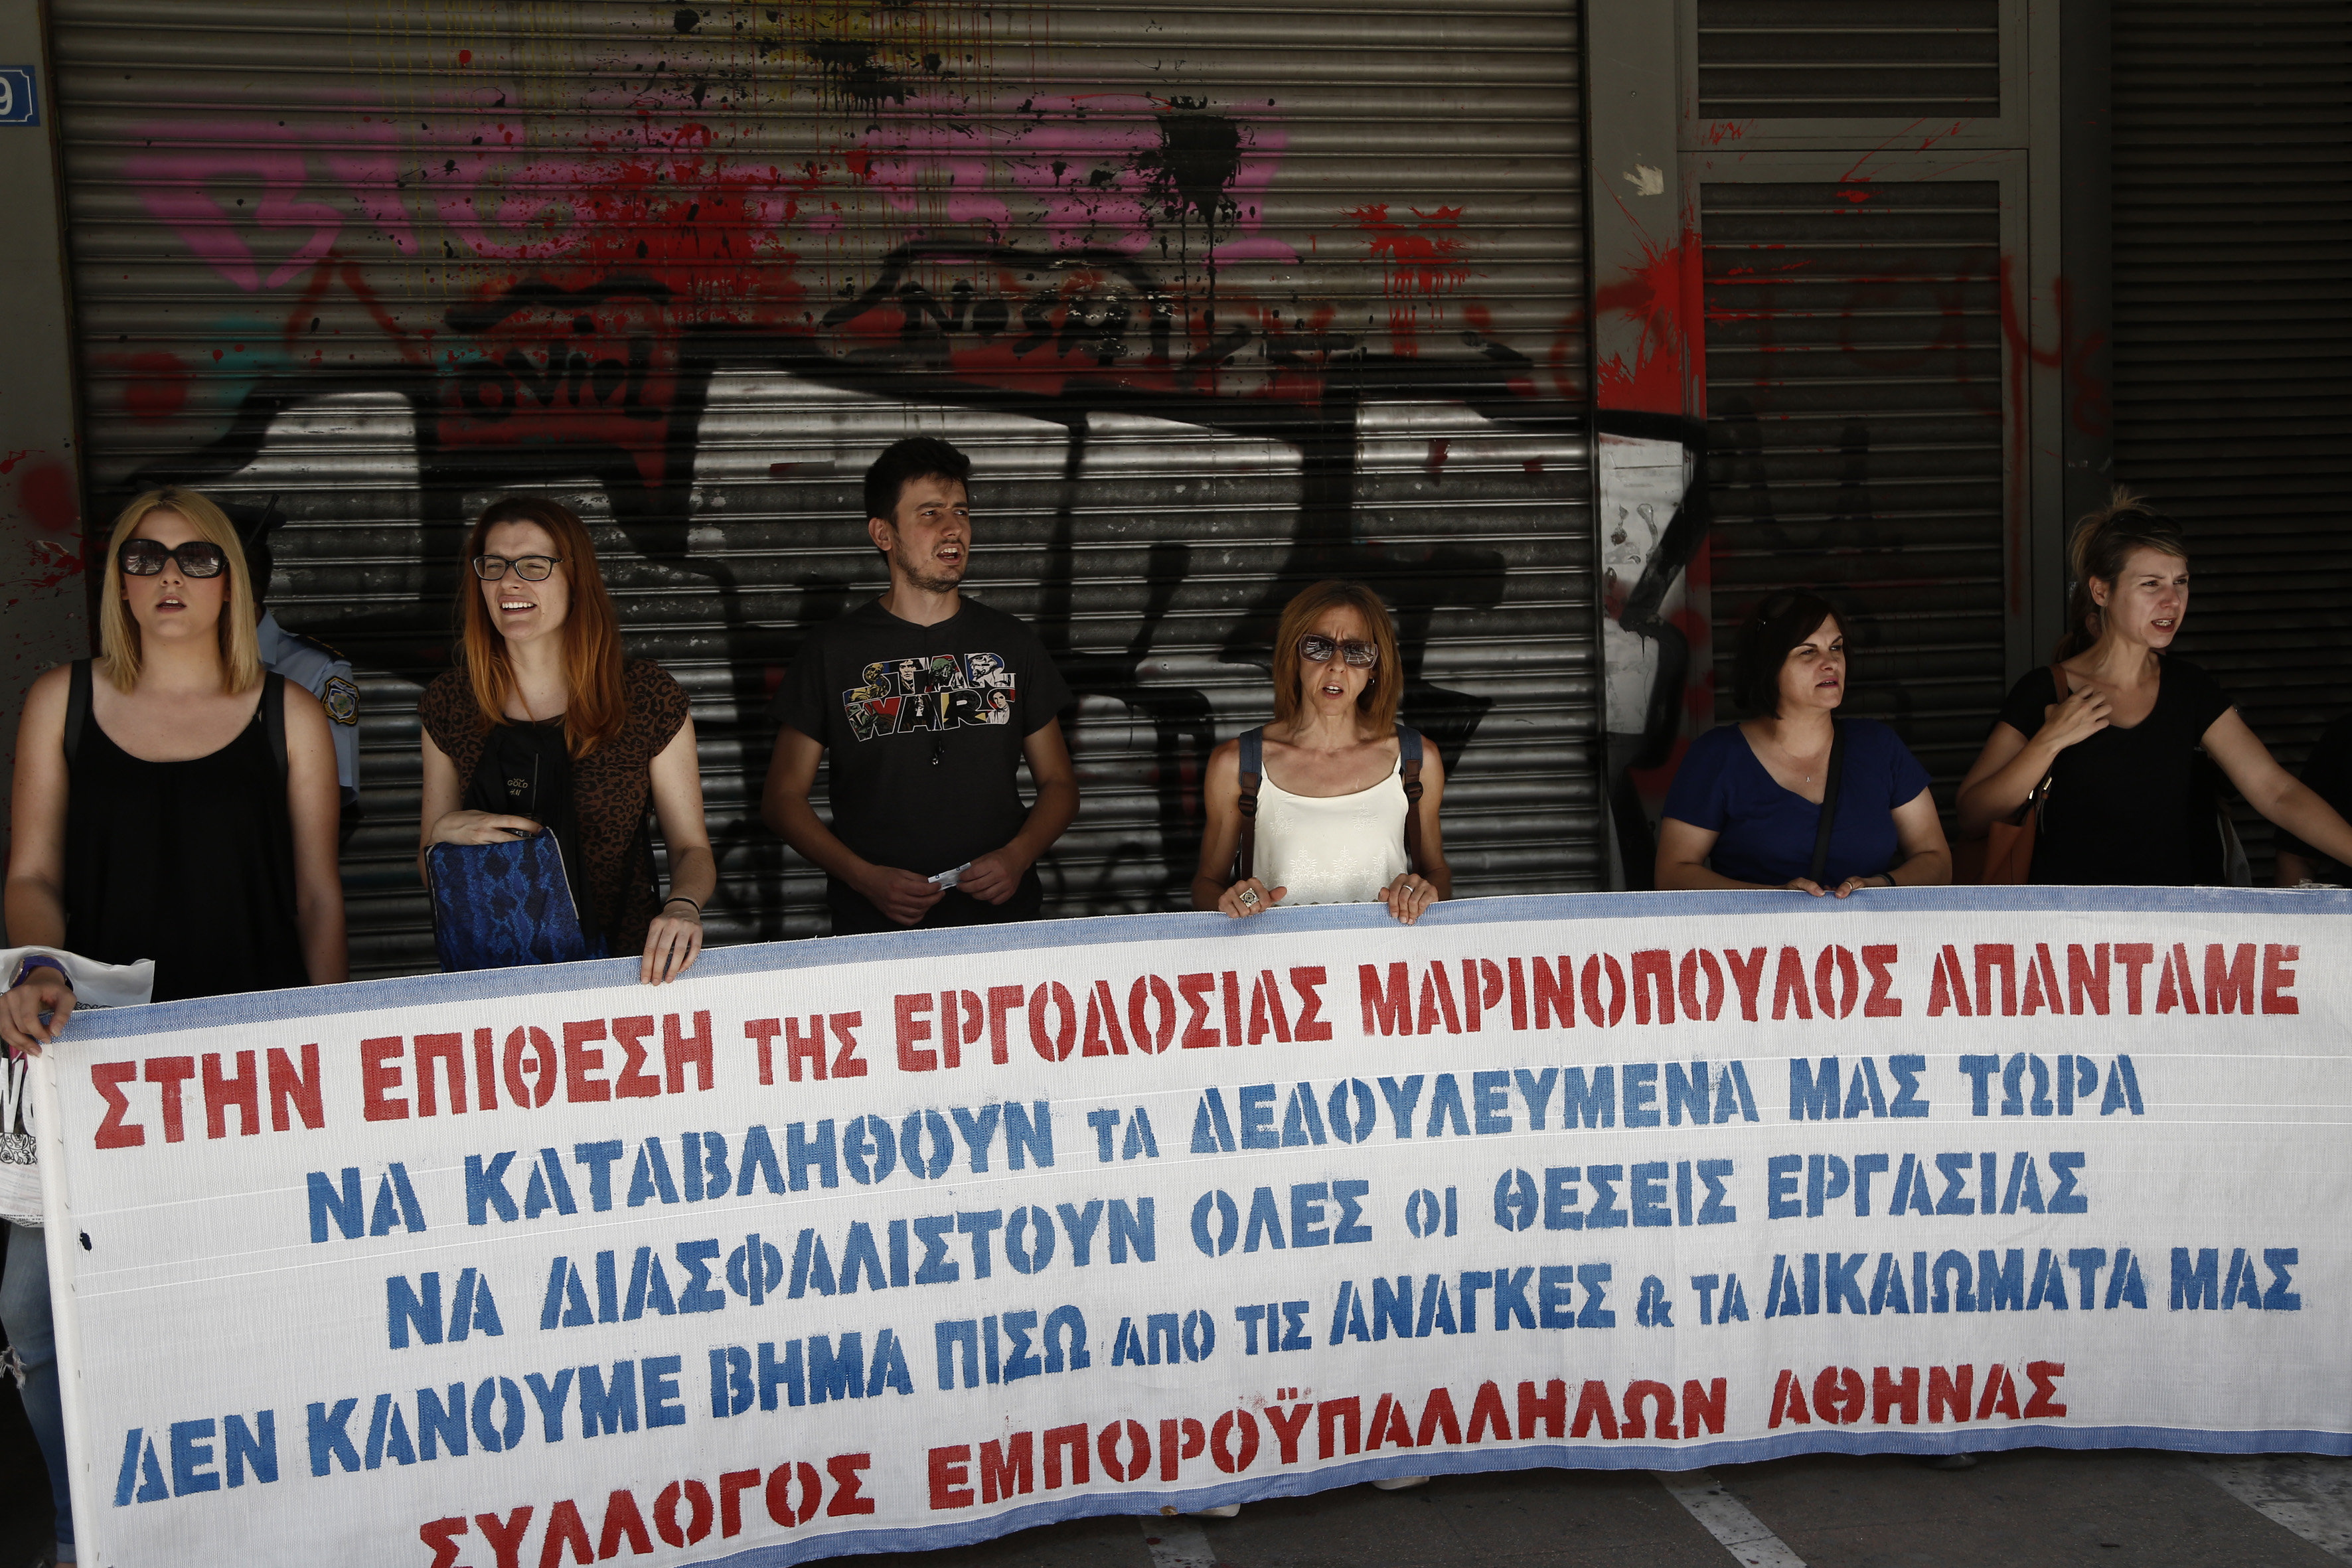 Bουλή: Η κυβέρνηση κάνει ό,τι μπορεί για να μην κλείσει ο Μαρινόπουλος